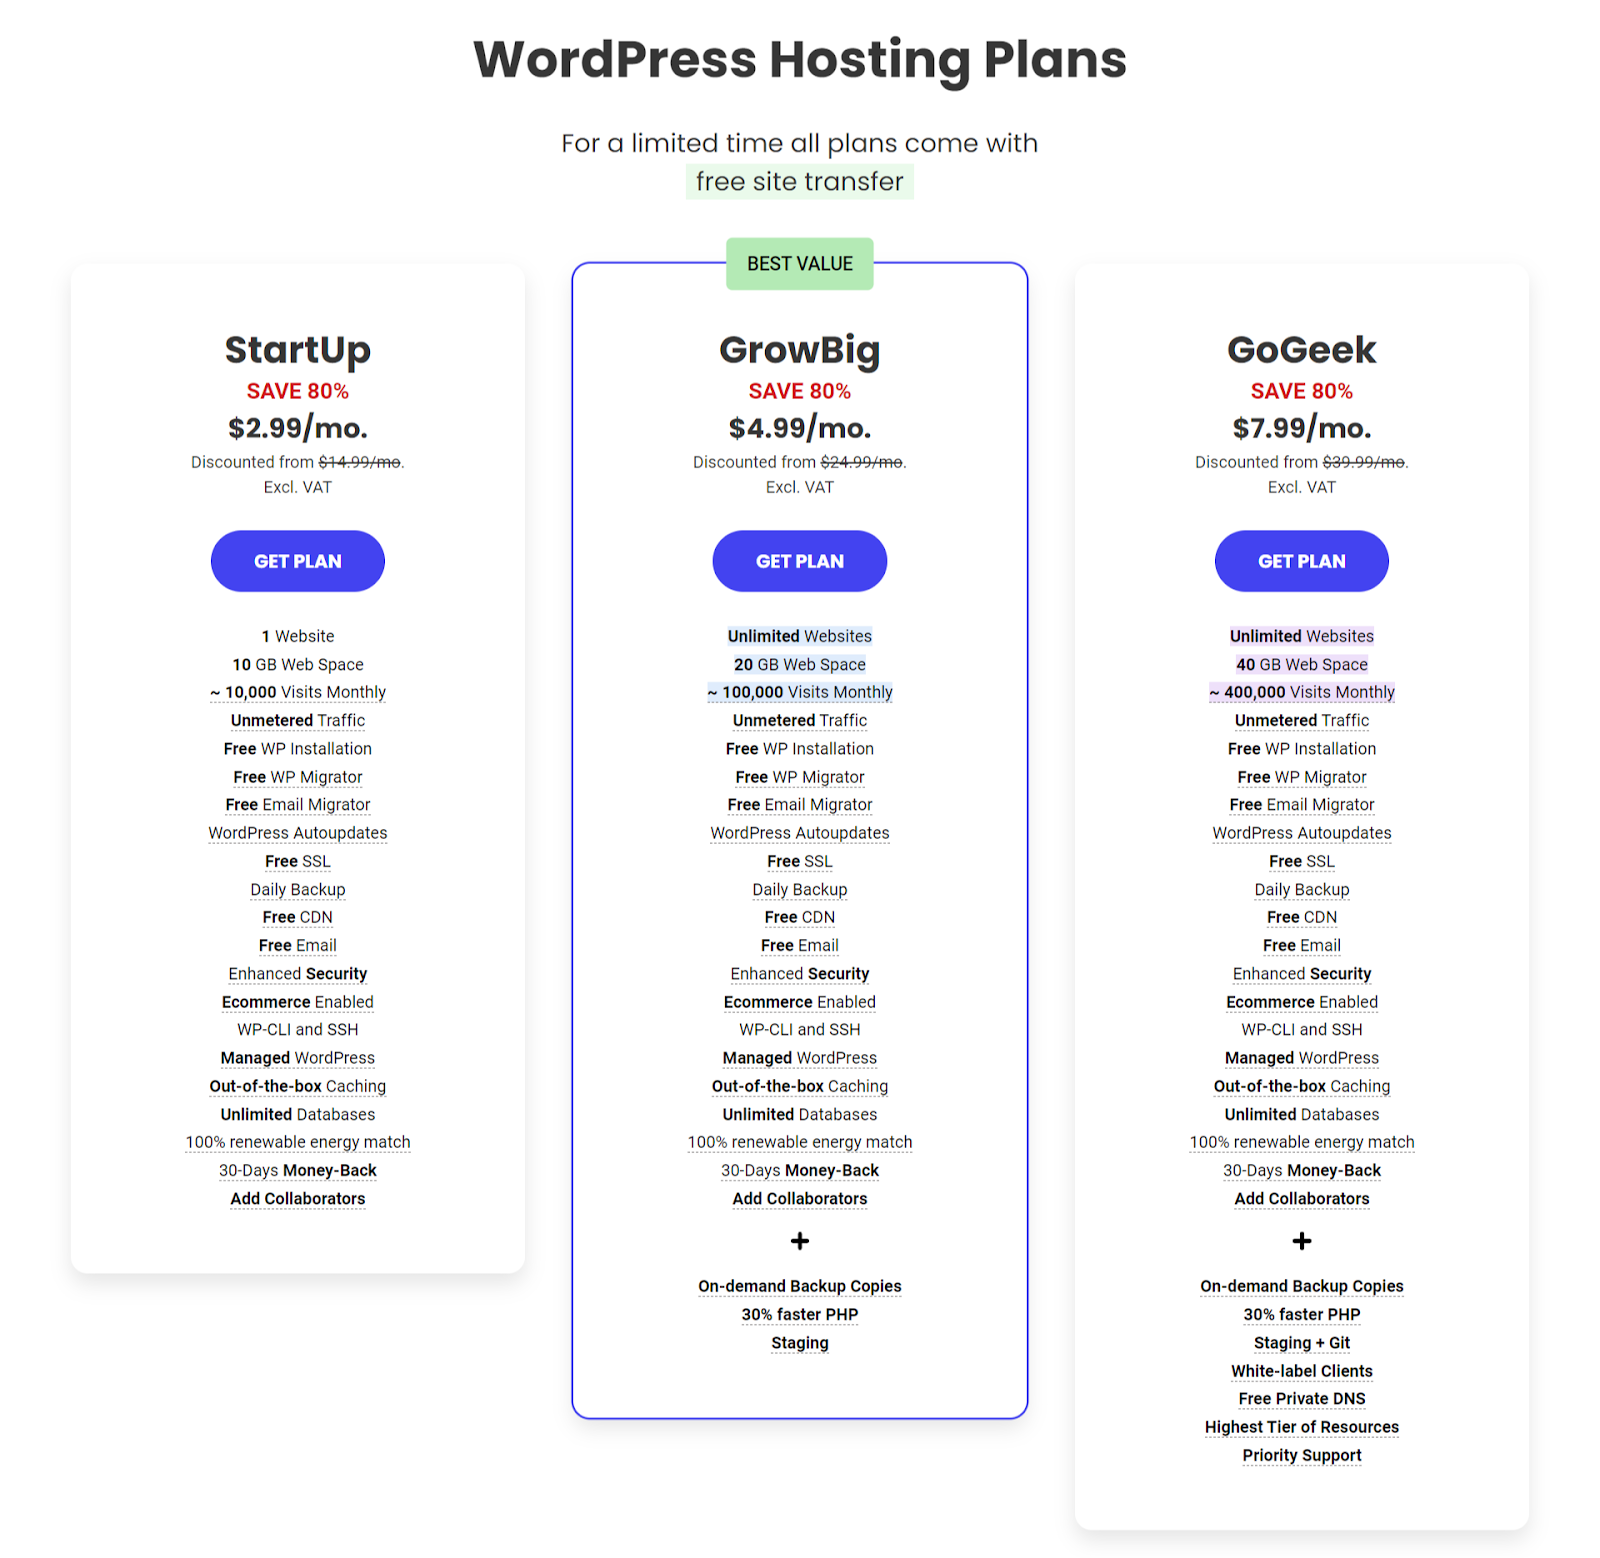 "WordPress Hosting Plans" page